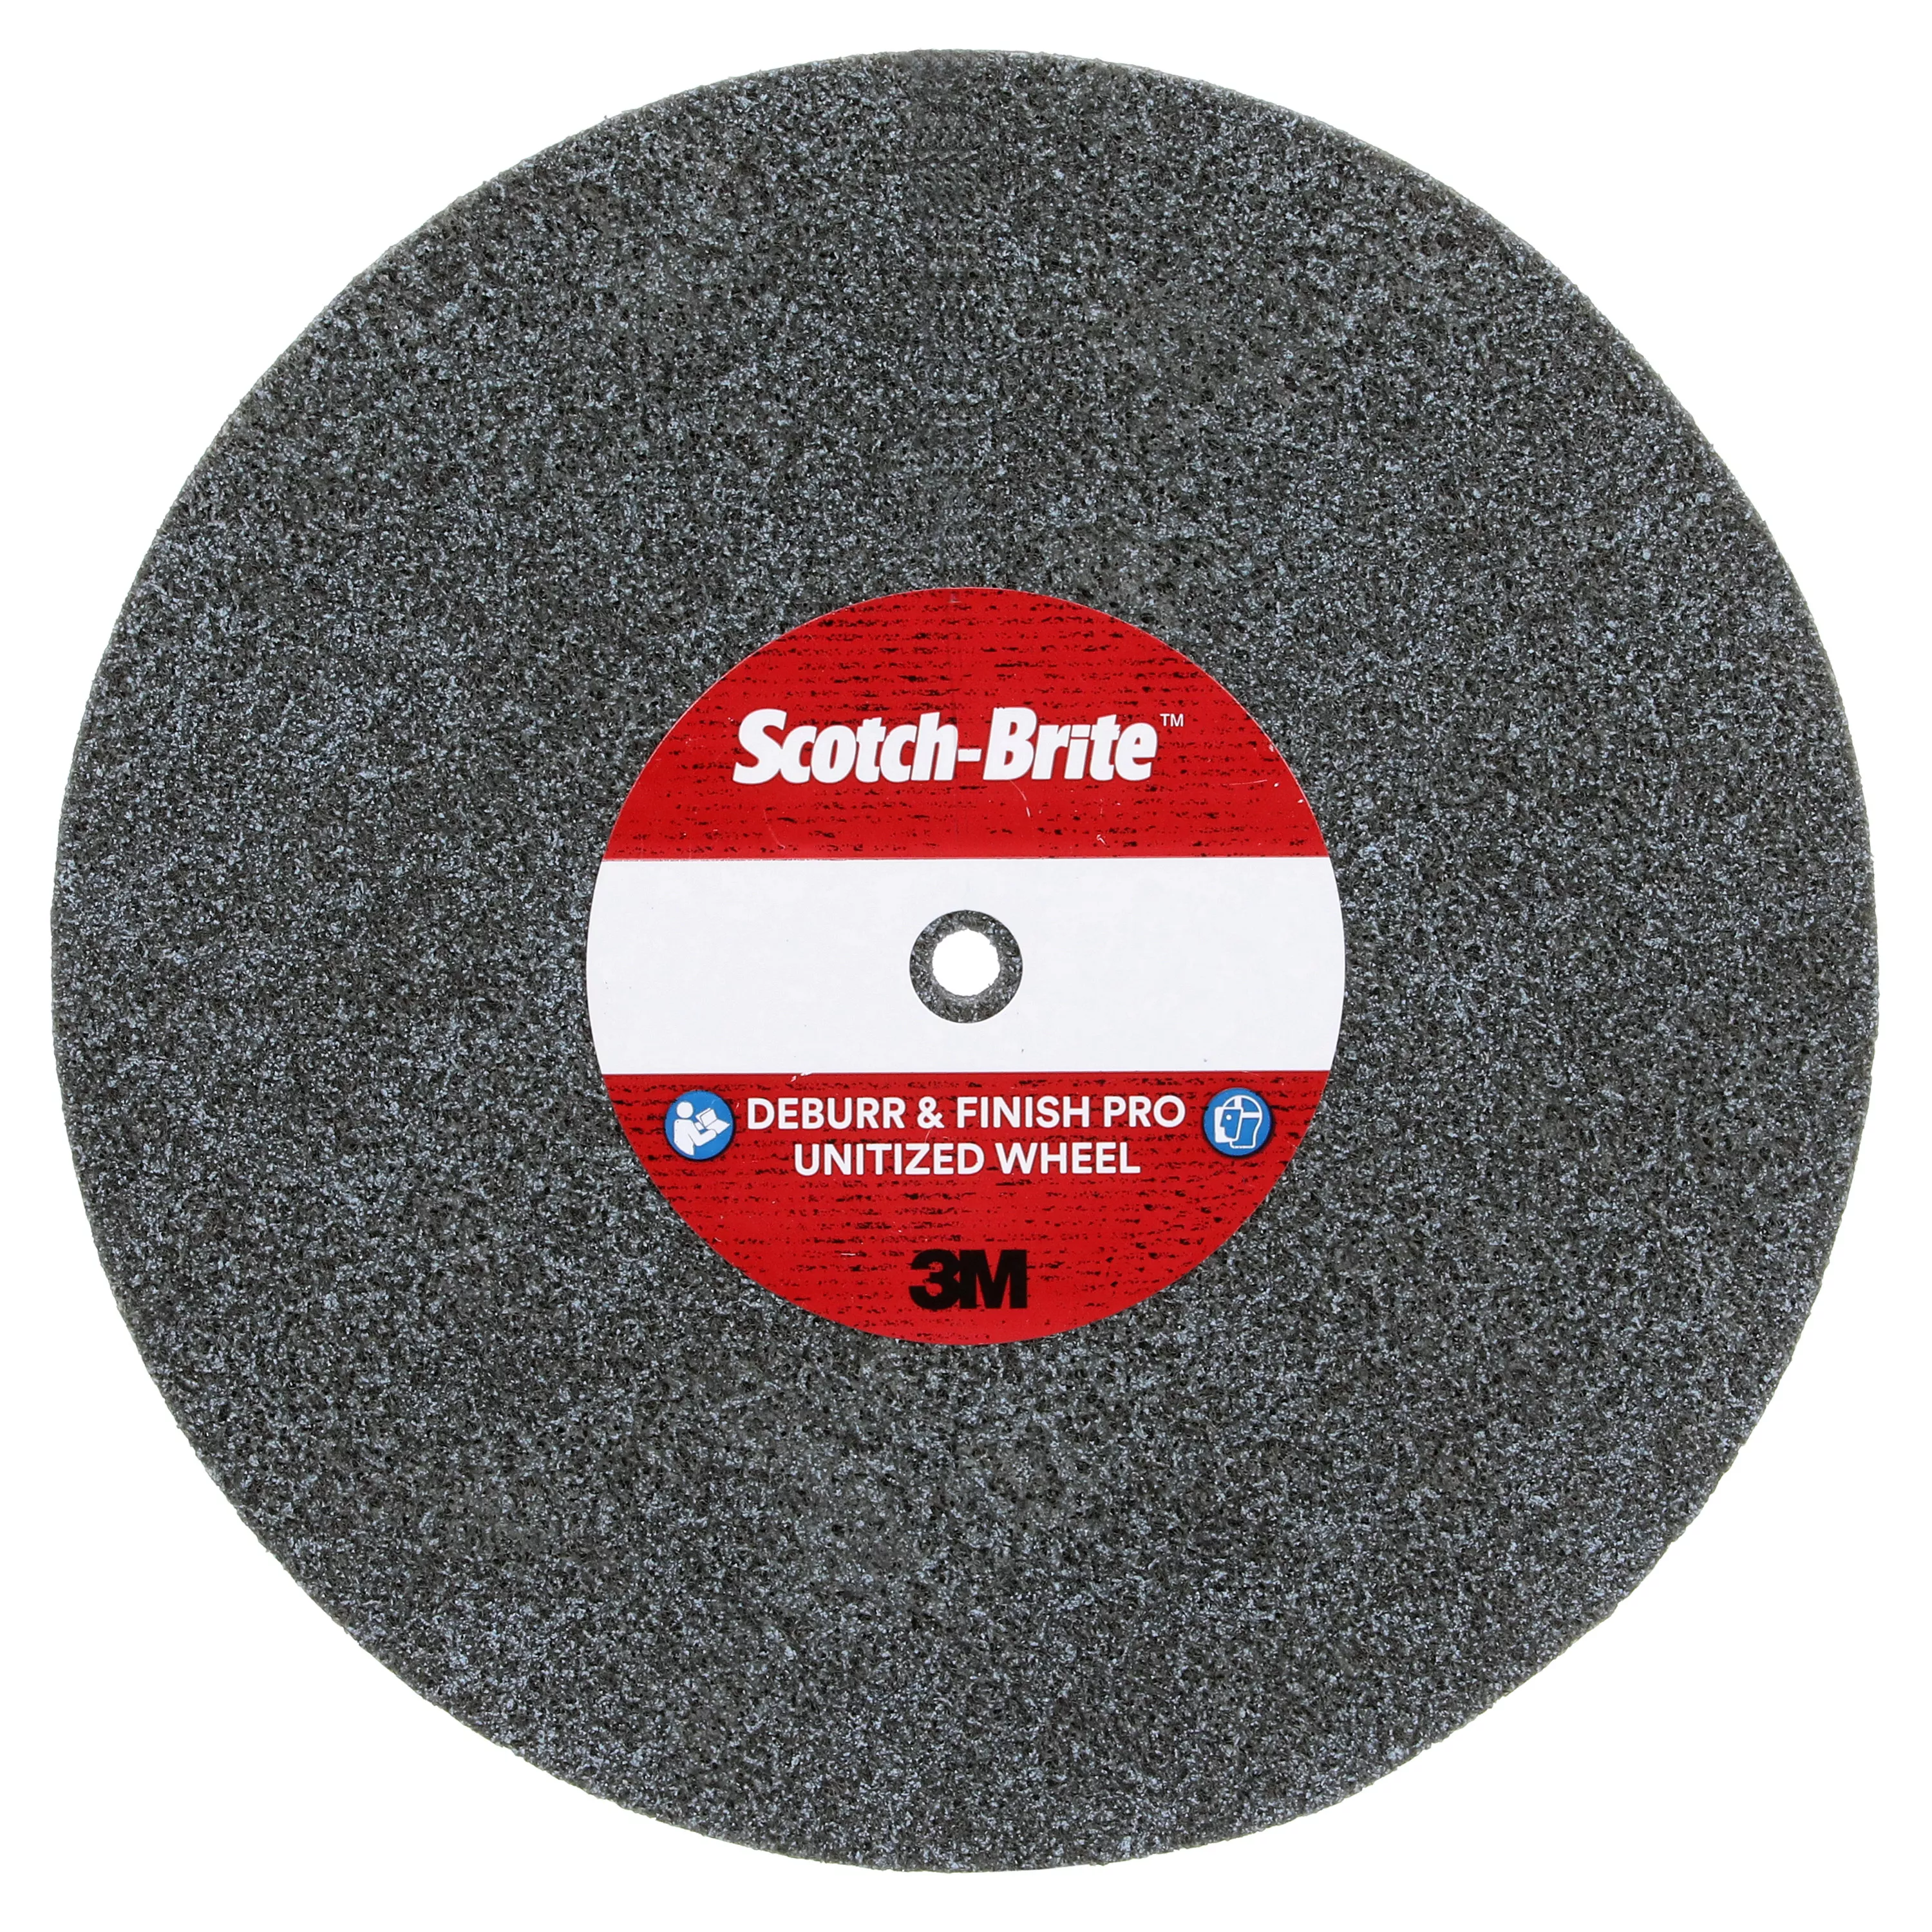 SKU 7100088613 | Scotch-Brite™ Deburr & Finish Pro Unitized Wheel